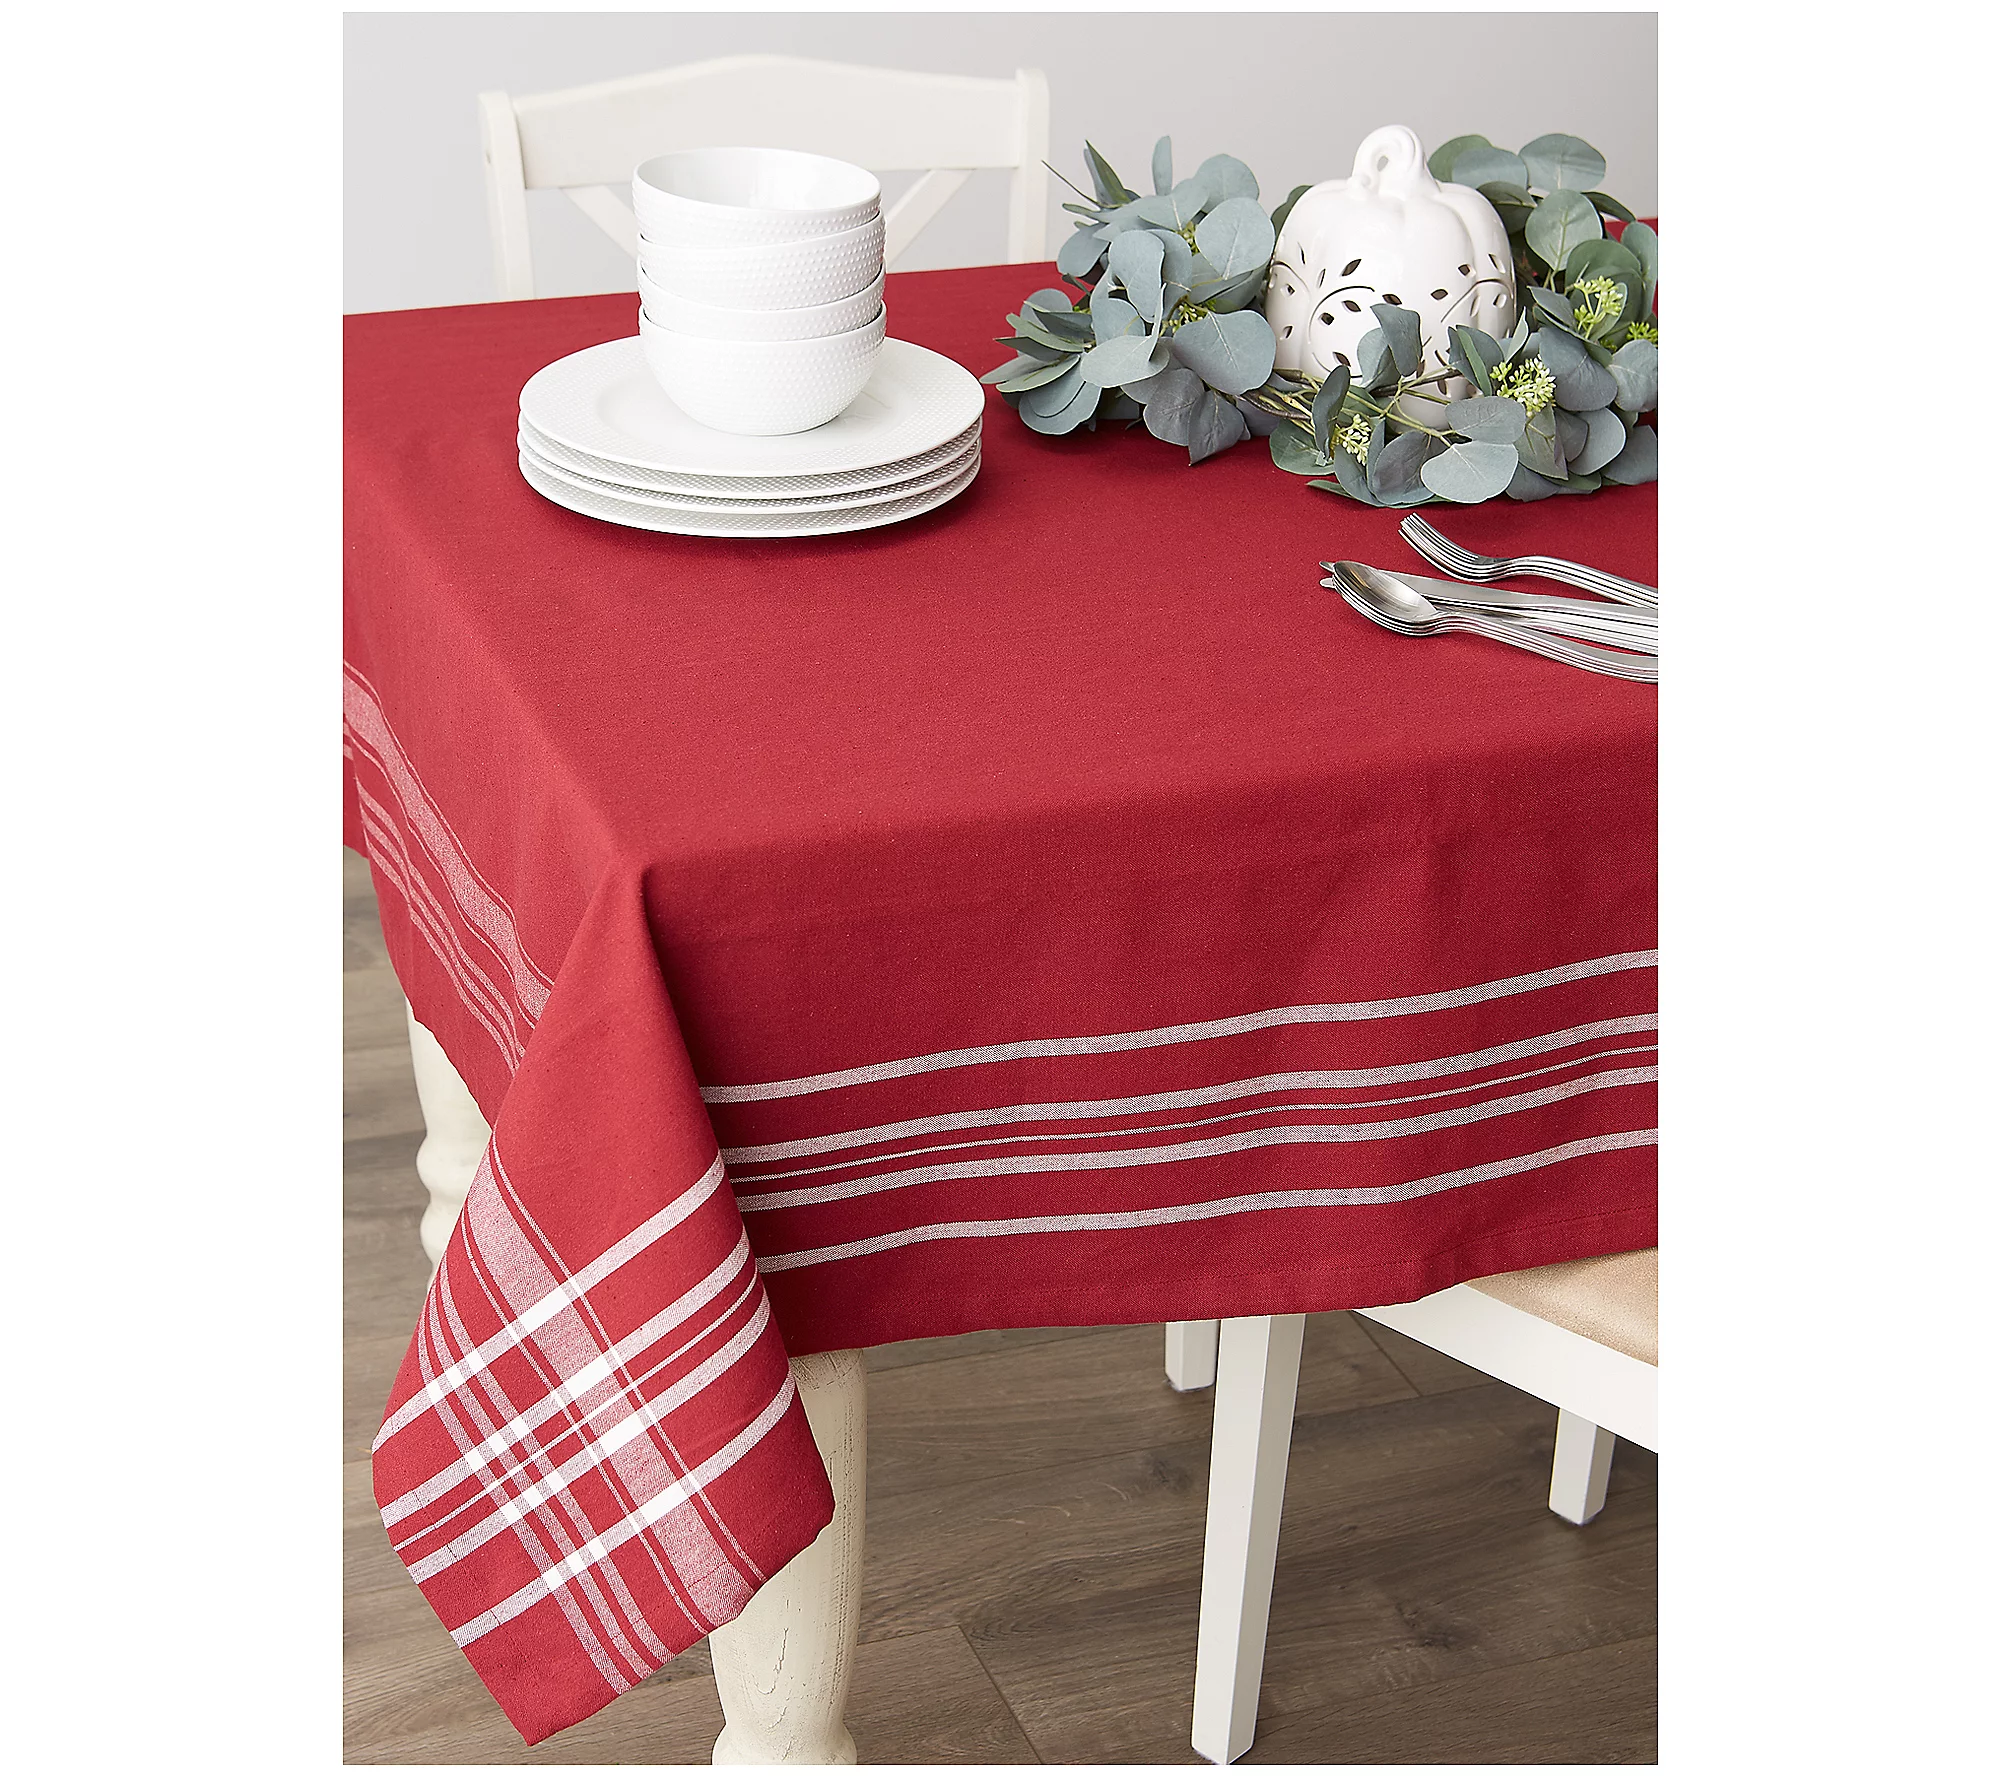 Design Imports Harvest Market Tablecloth 60